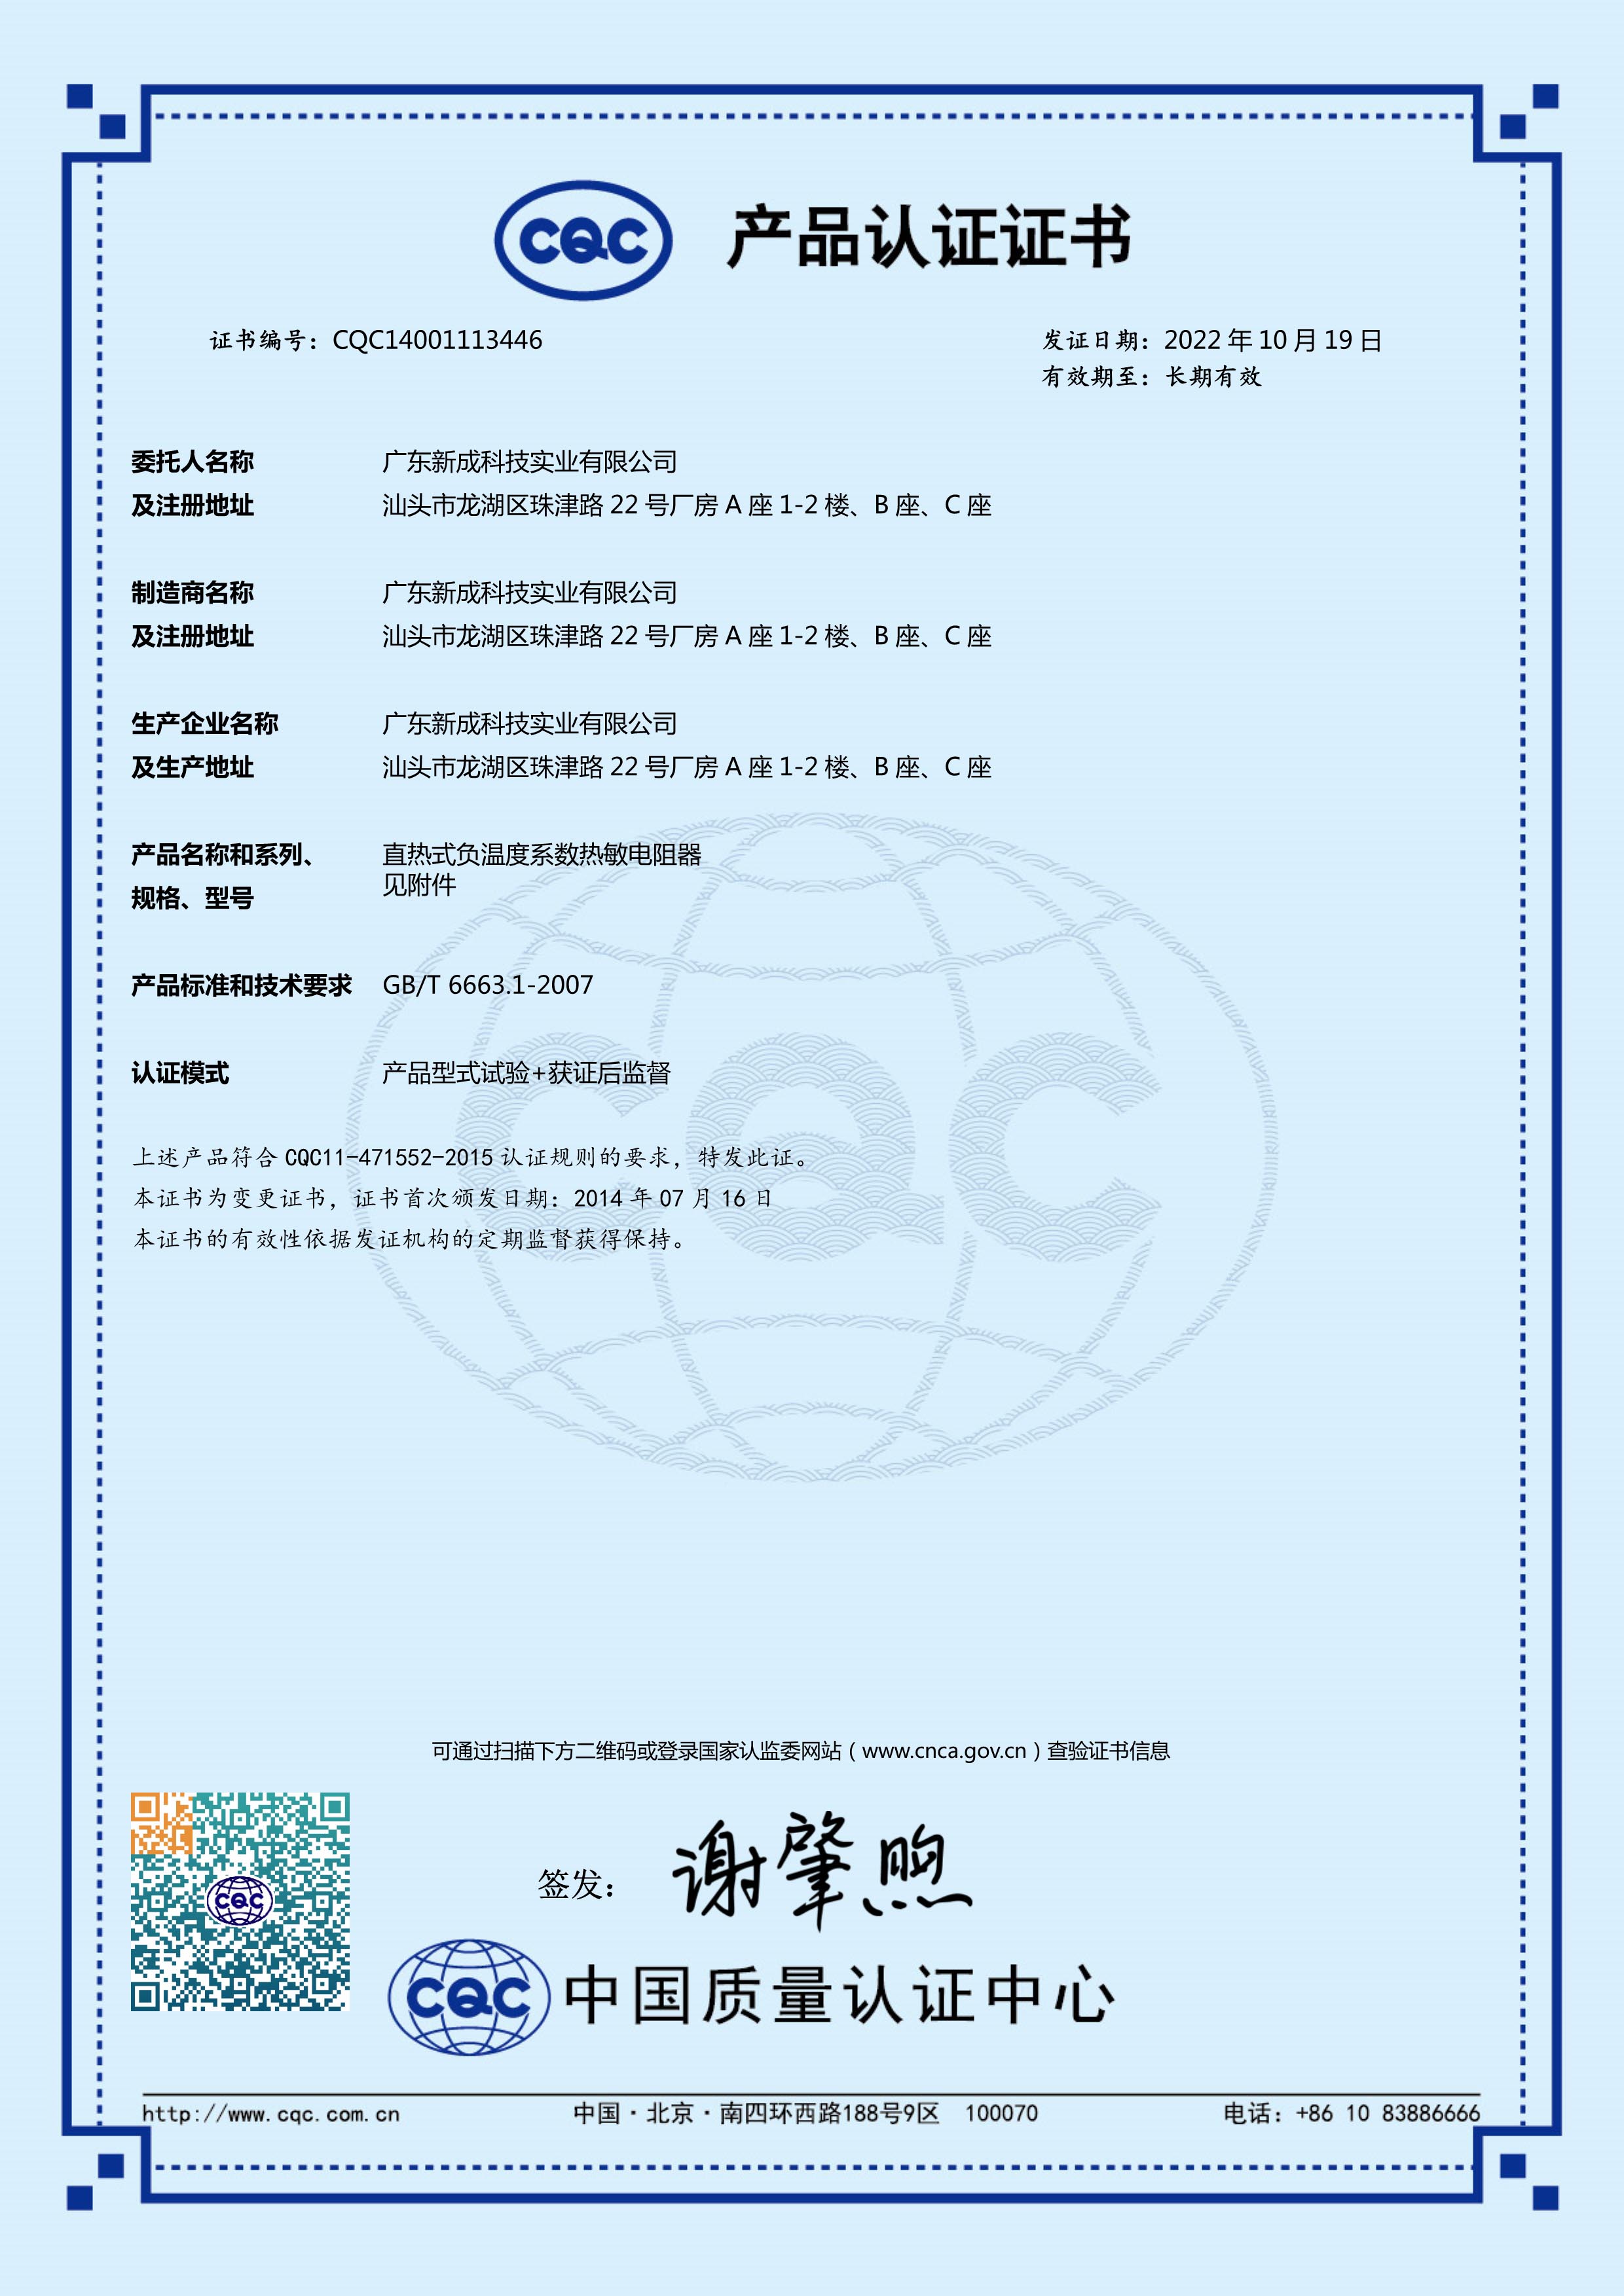 Thermal NTC certificate 1